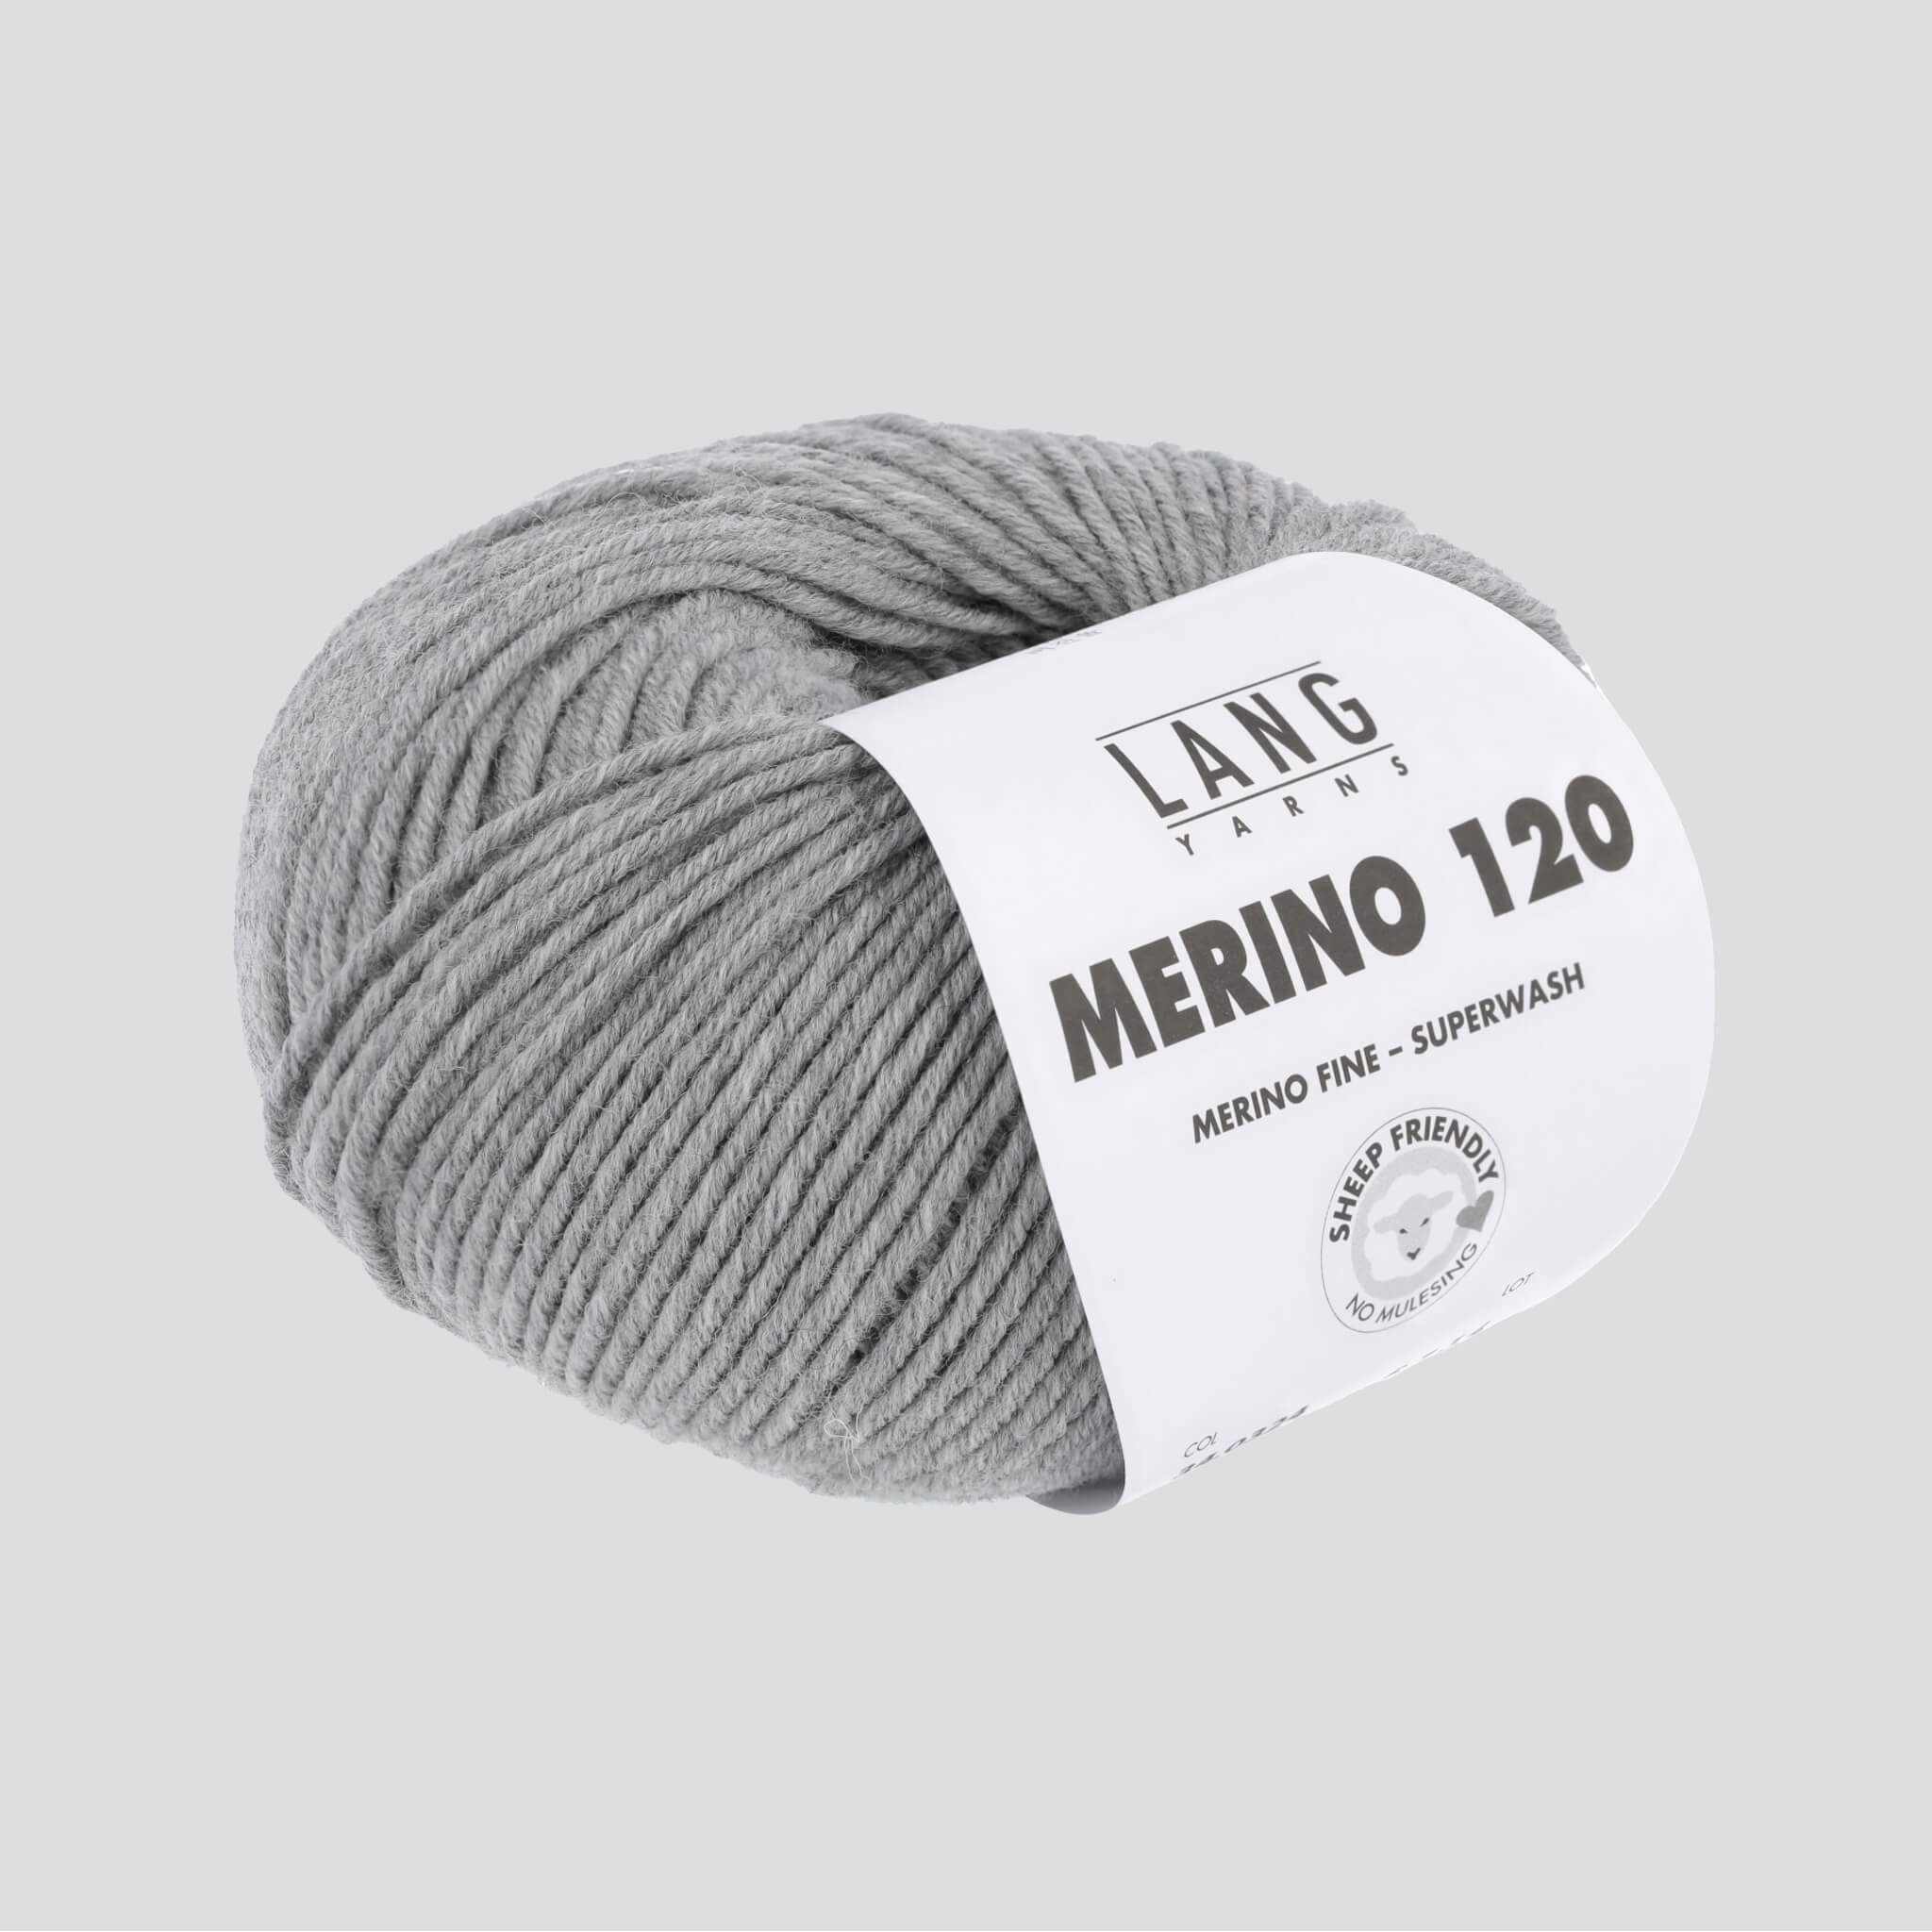 Merino 120, farve 0324 grå - garn fra Lang Yarn | Yarn HobbyTilbud.dk